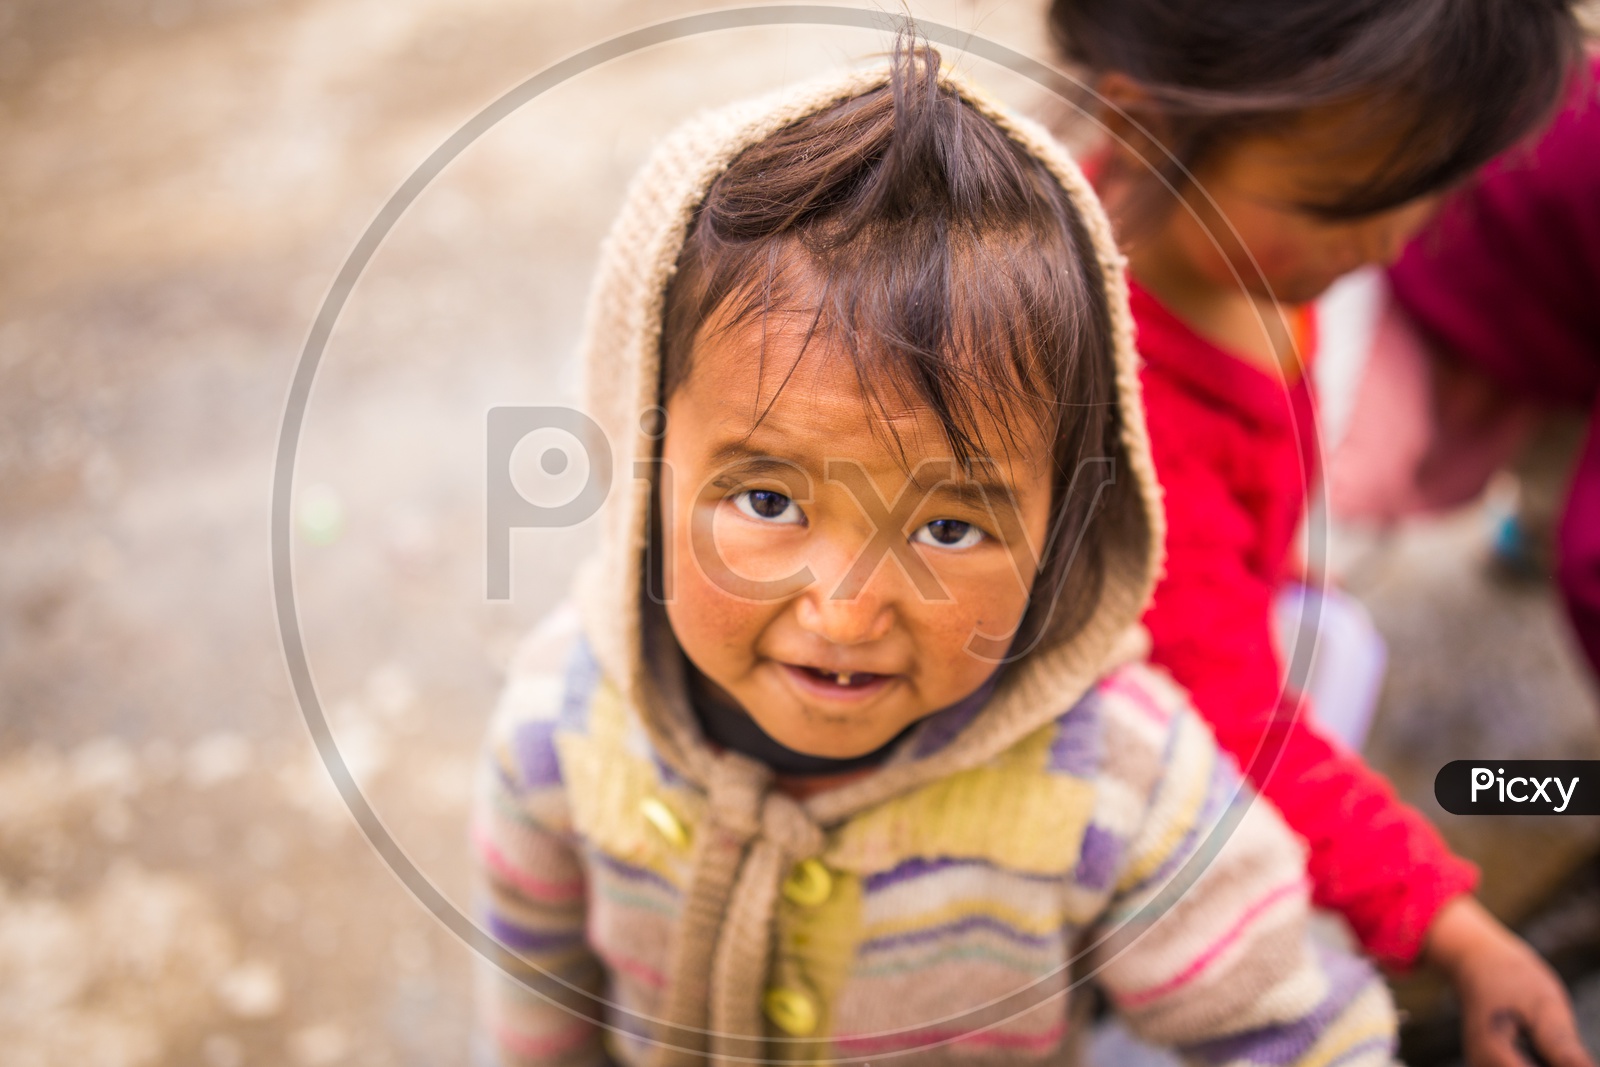 School Kids Or Children In The Villages Of  Spiti Valley